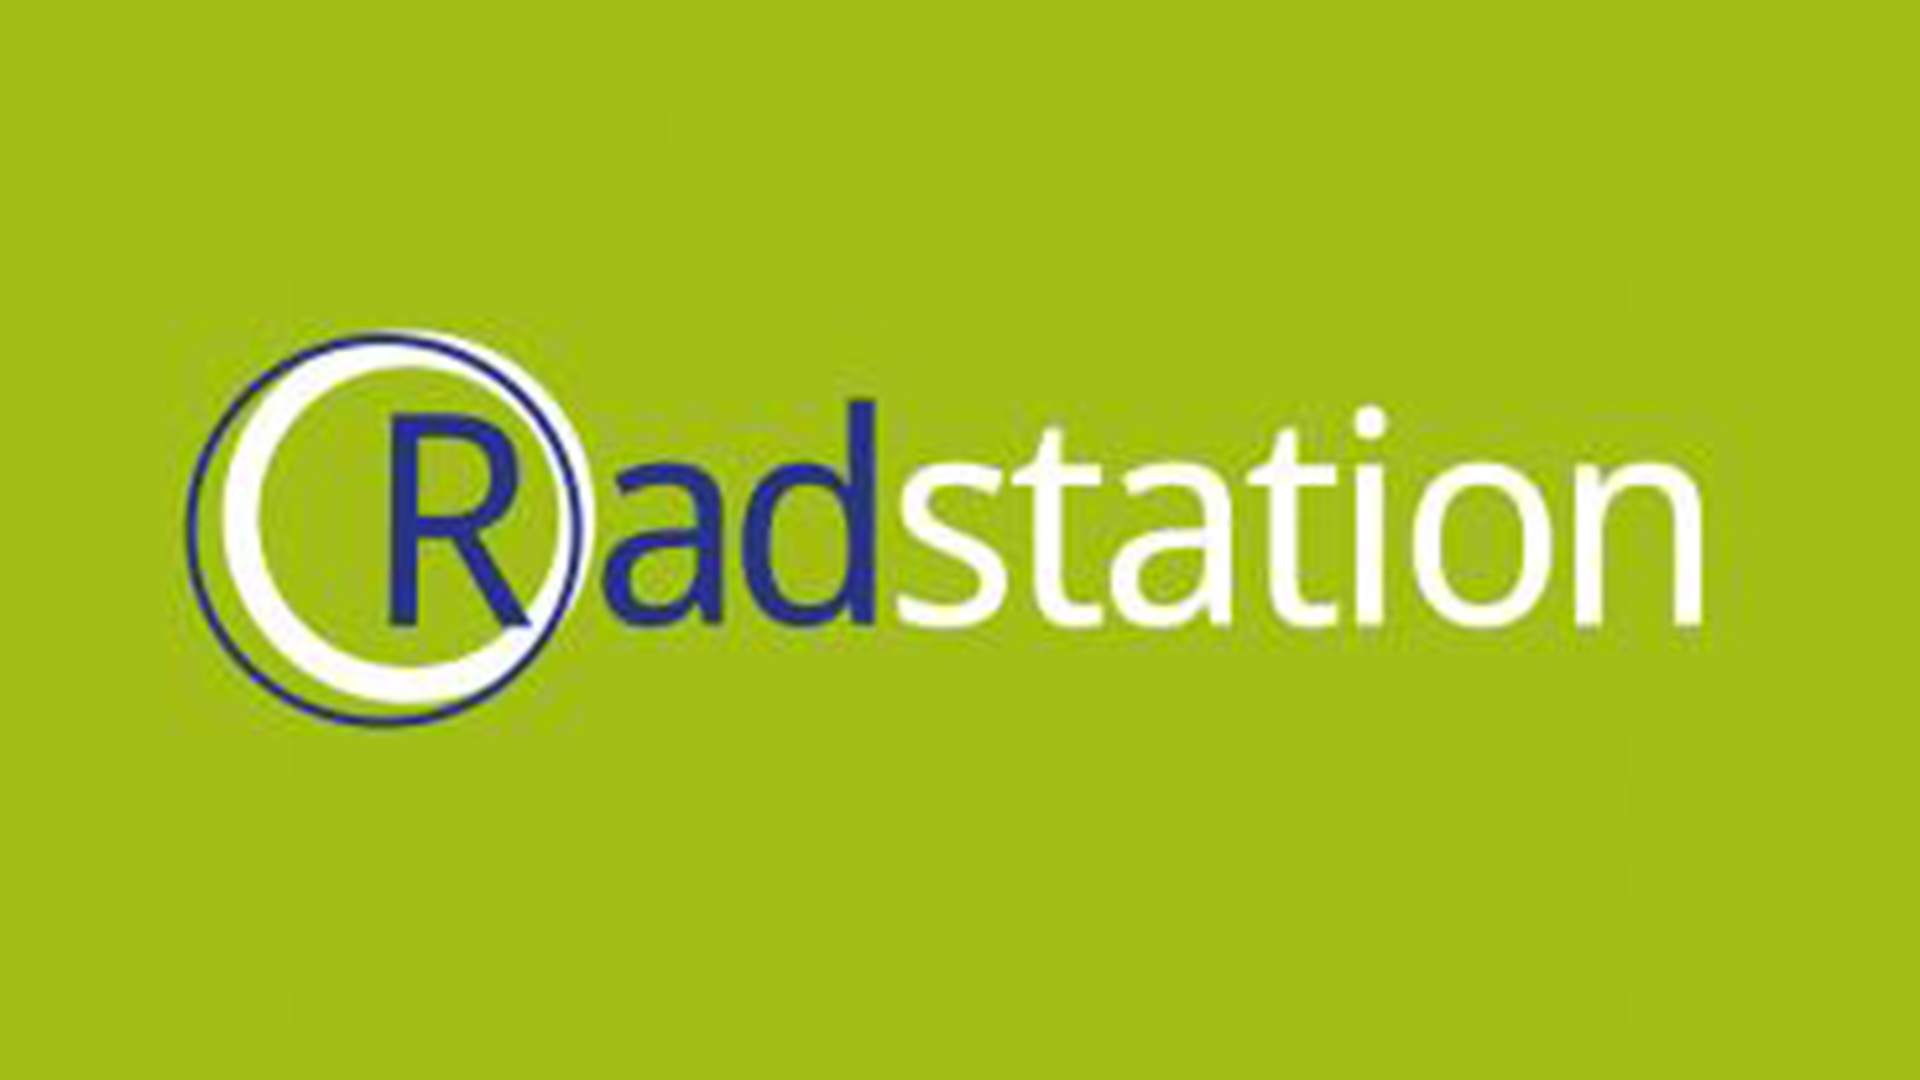 Radstation logo